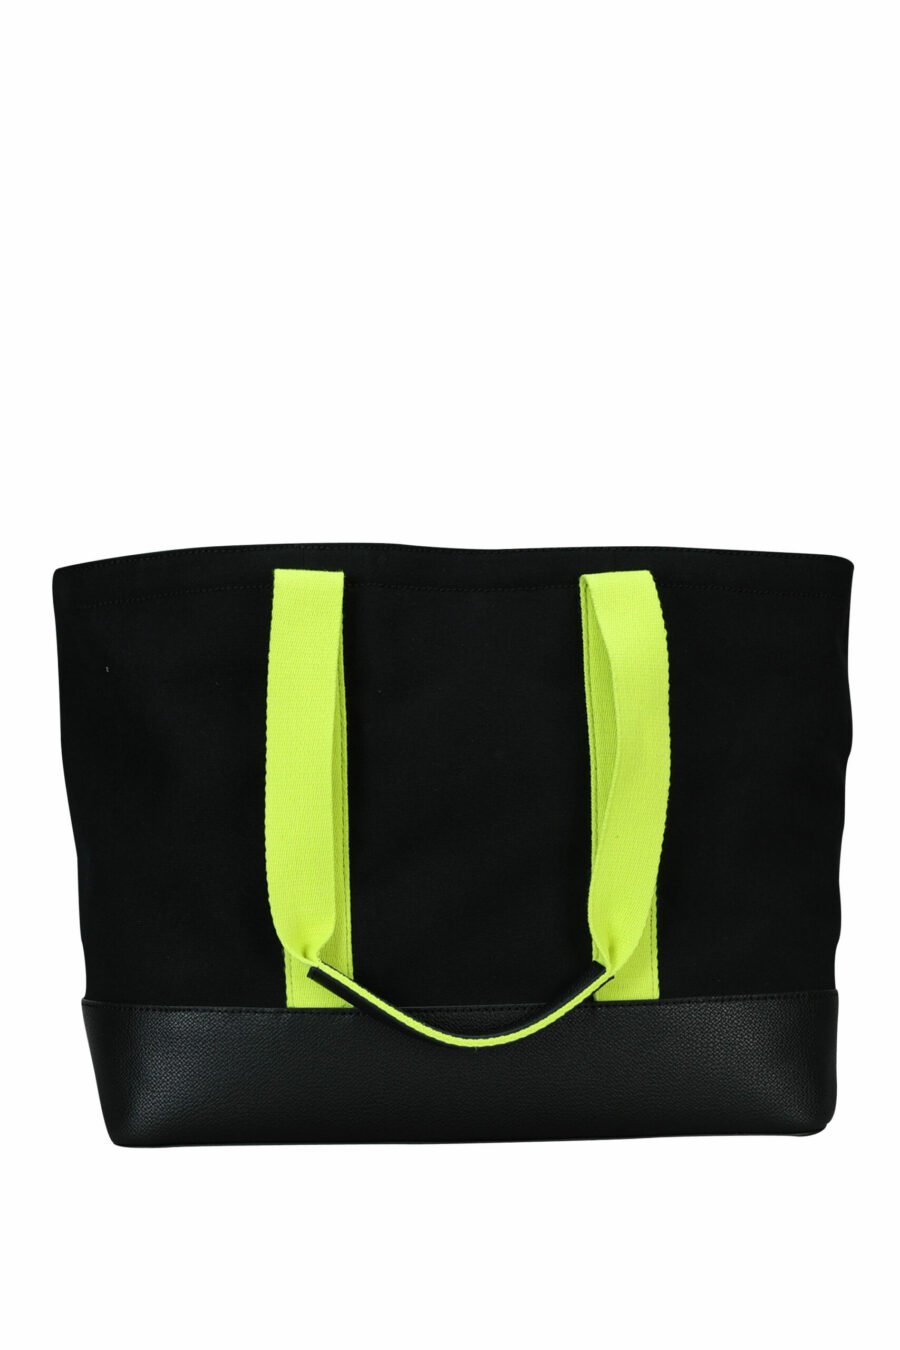 Tote bag negra con maxilogo verde lima - 8050537398479 2 scaled